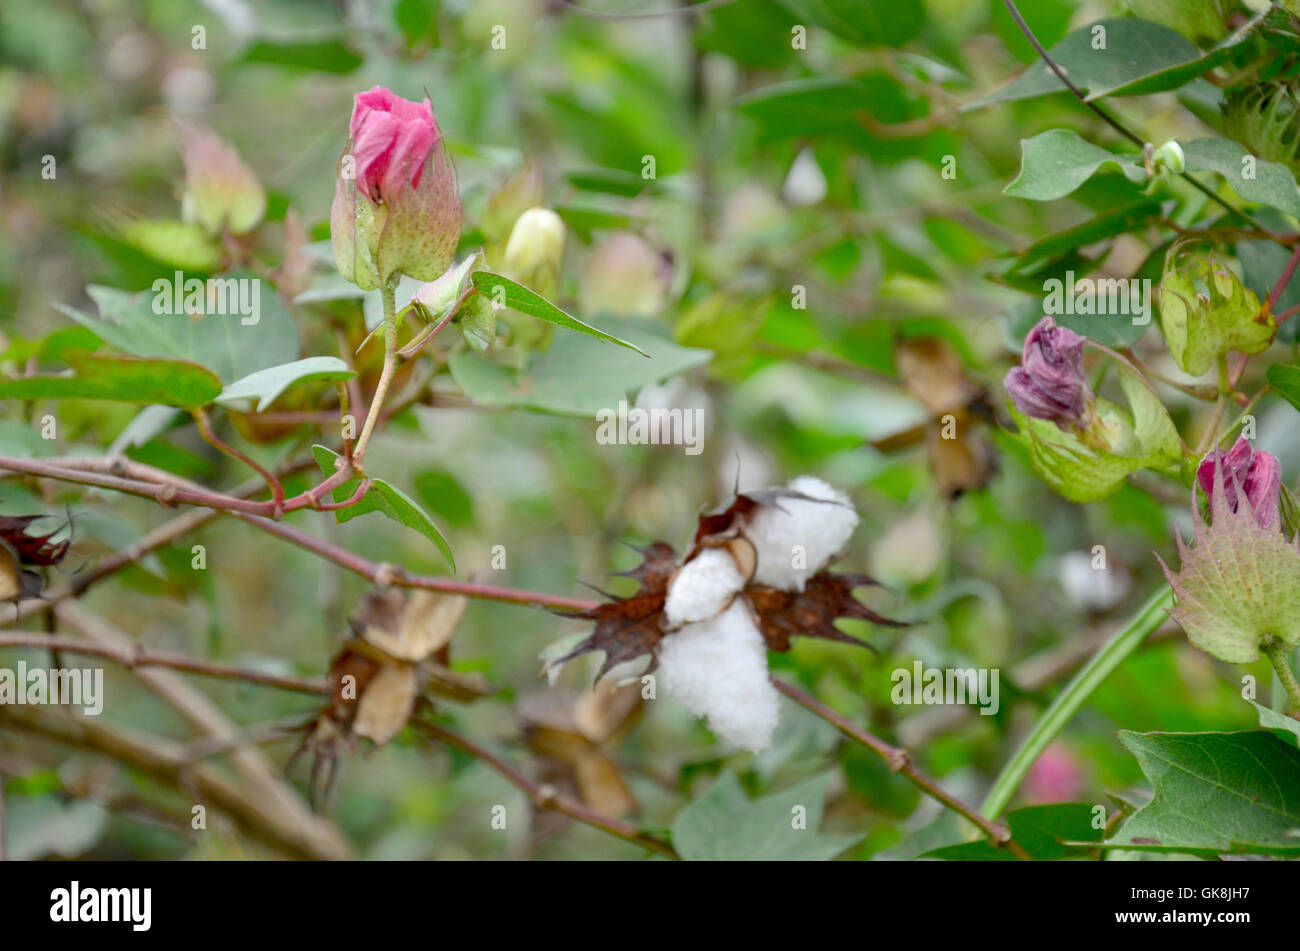 Flower of Gossypium herbaceum or cotton flowers on tree in garden Stock Photo